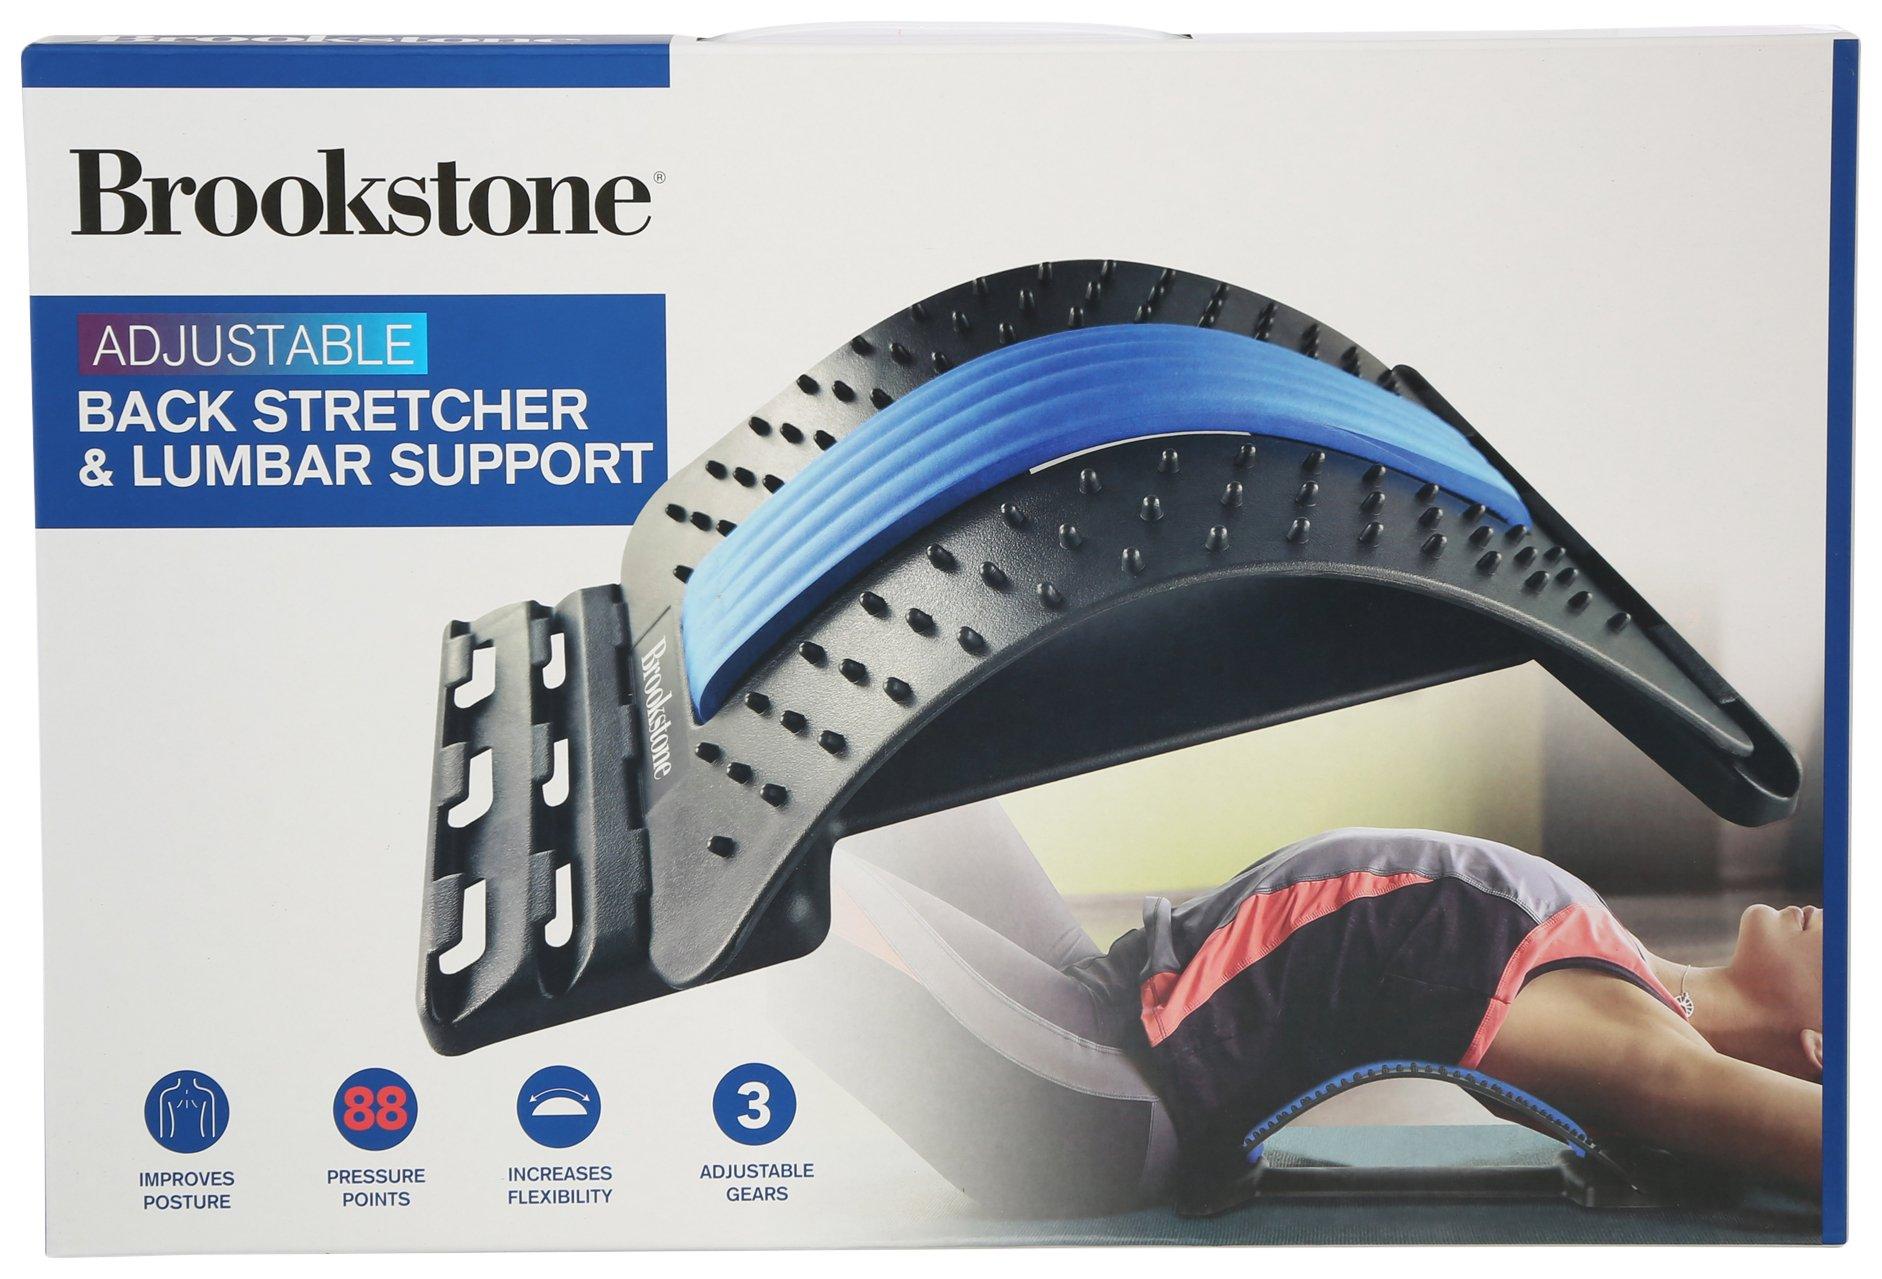 Adjustable Back Stretcher & Lumbar Support